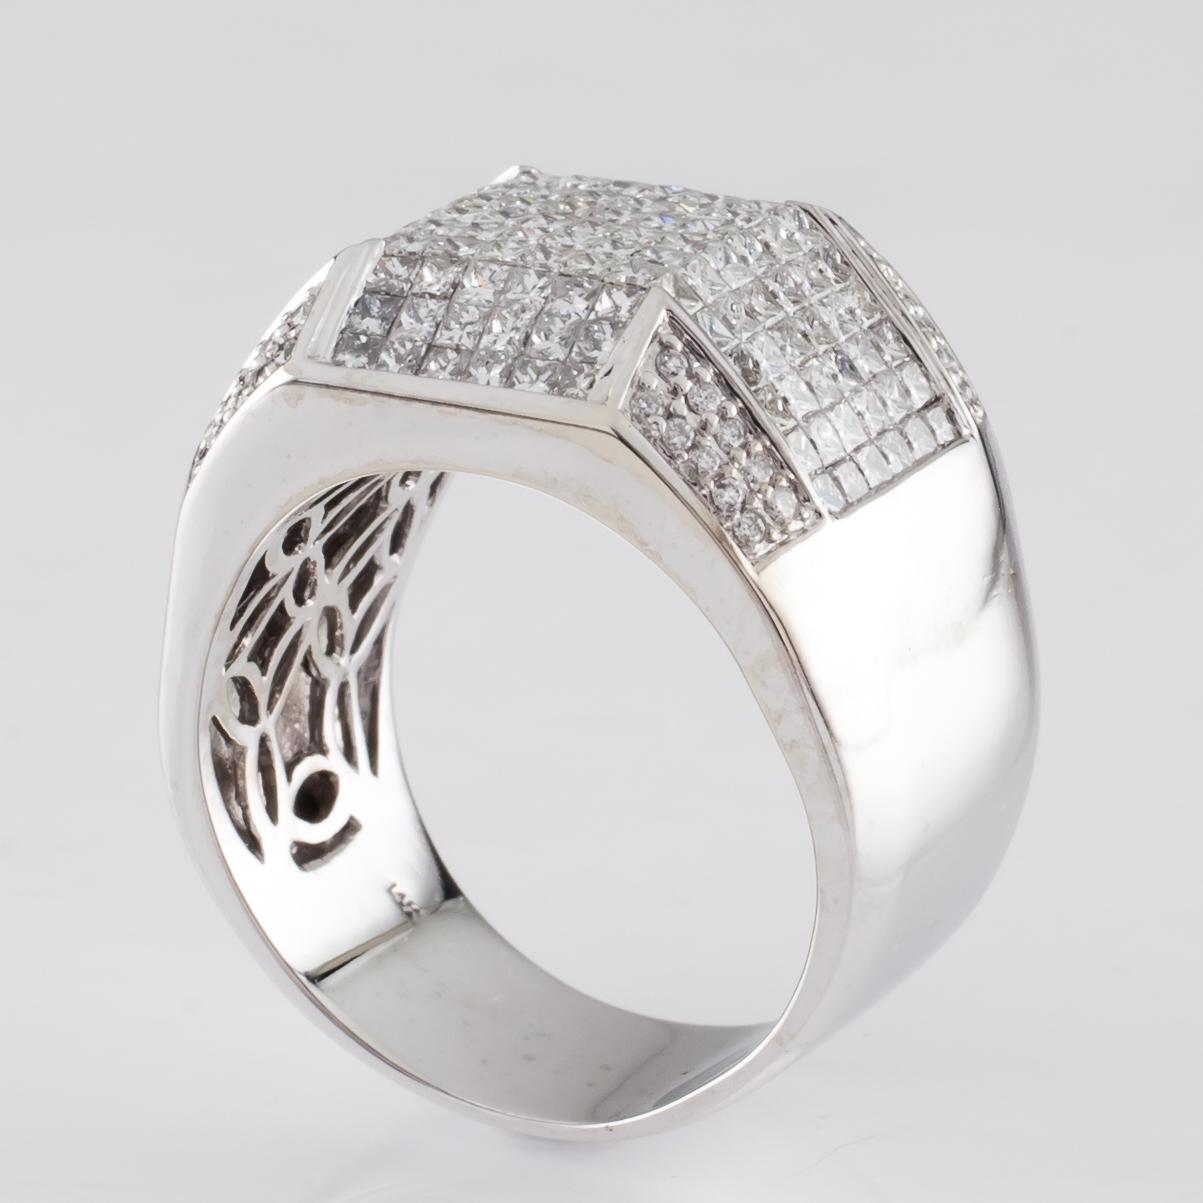 1000 carat diamond ring